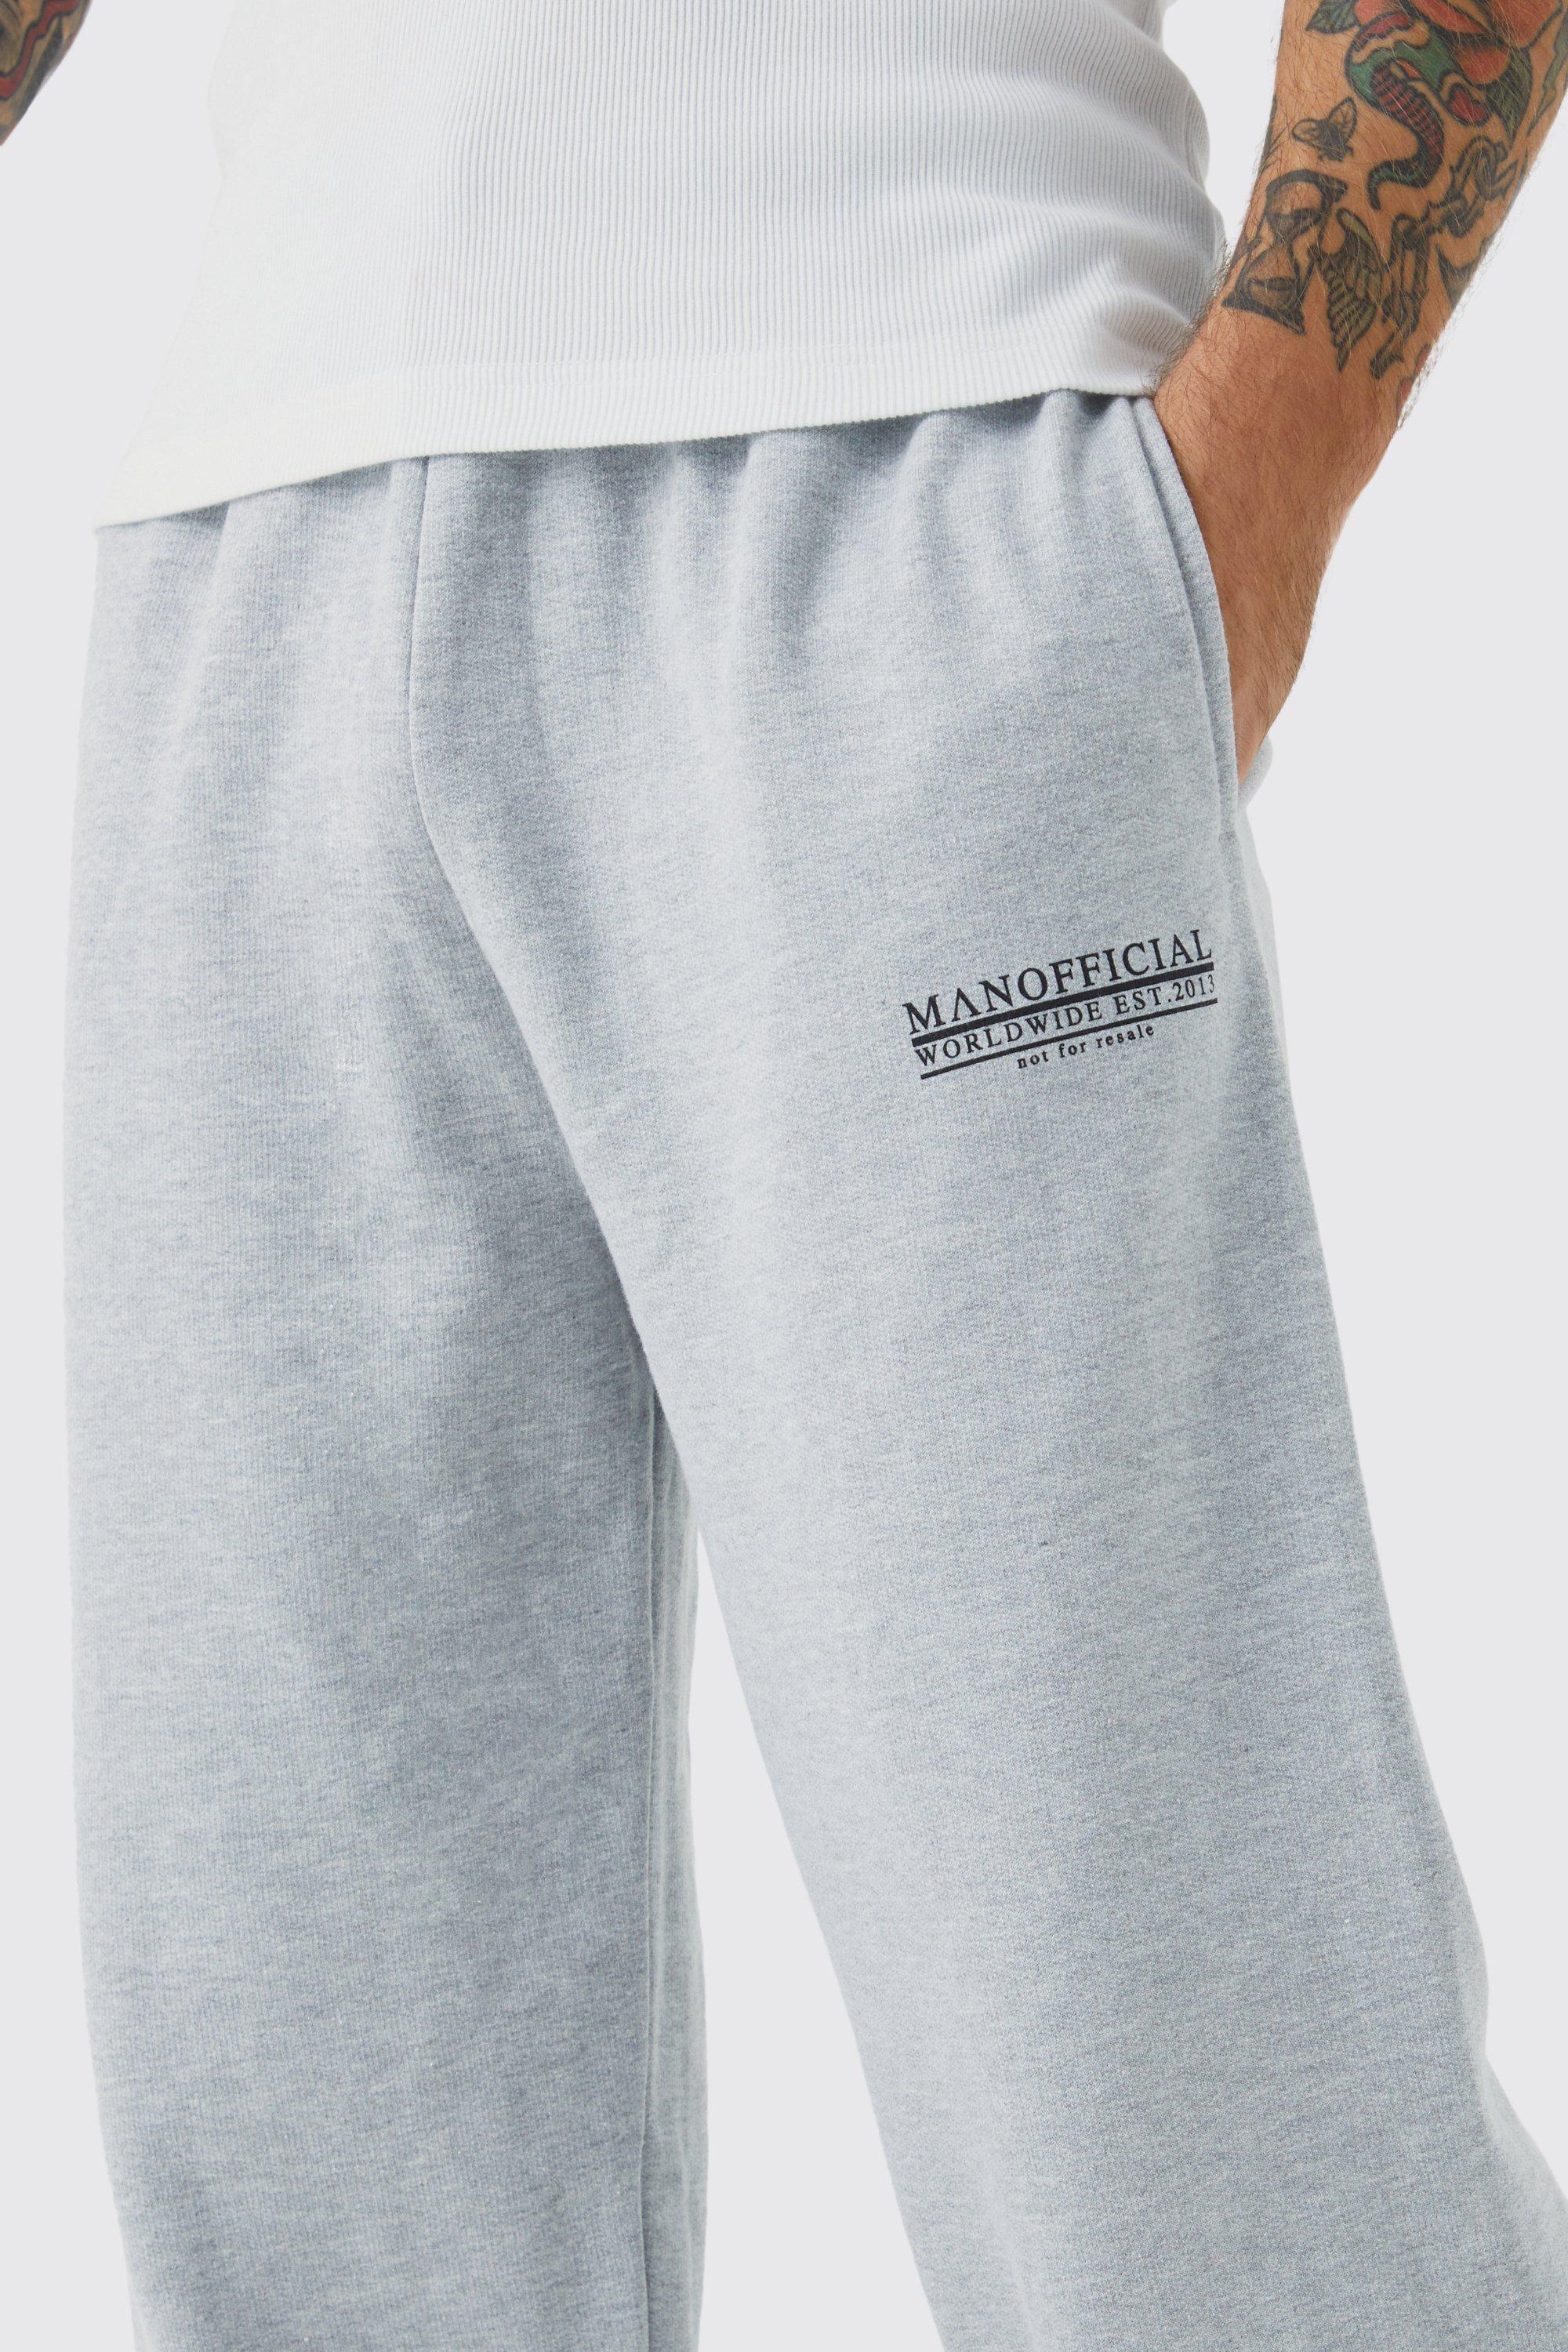 BoohooMAN Oversize Man Official Jogginghose mit Worldwide-Print in Grau für  Herren | Lyst DE